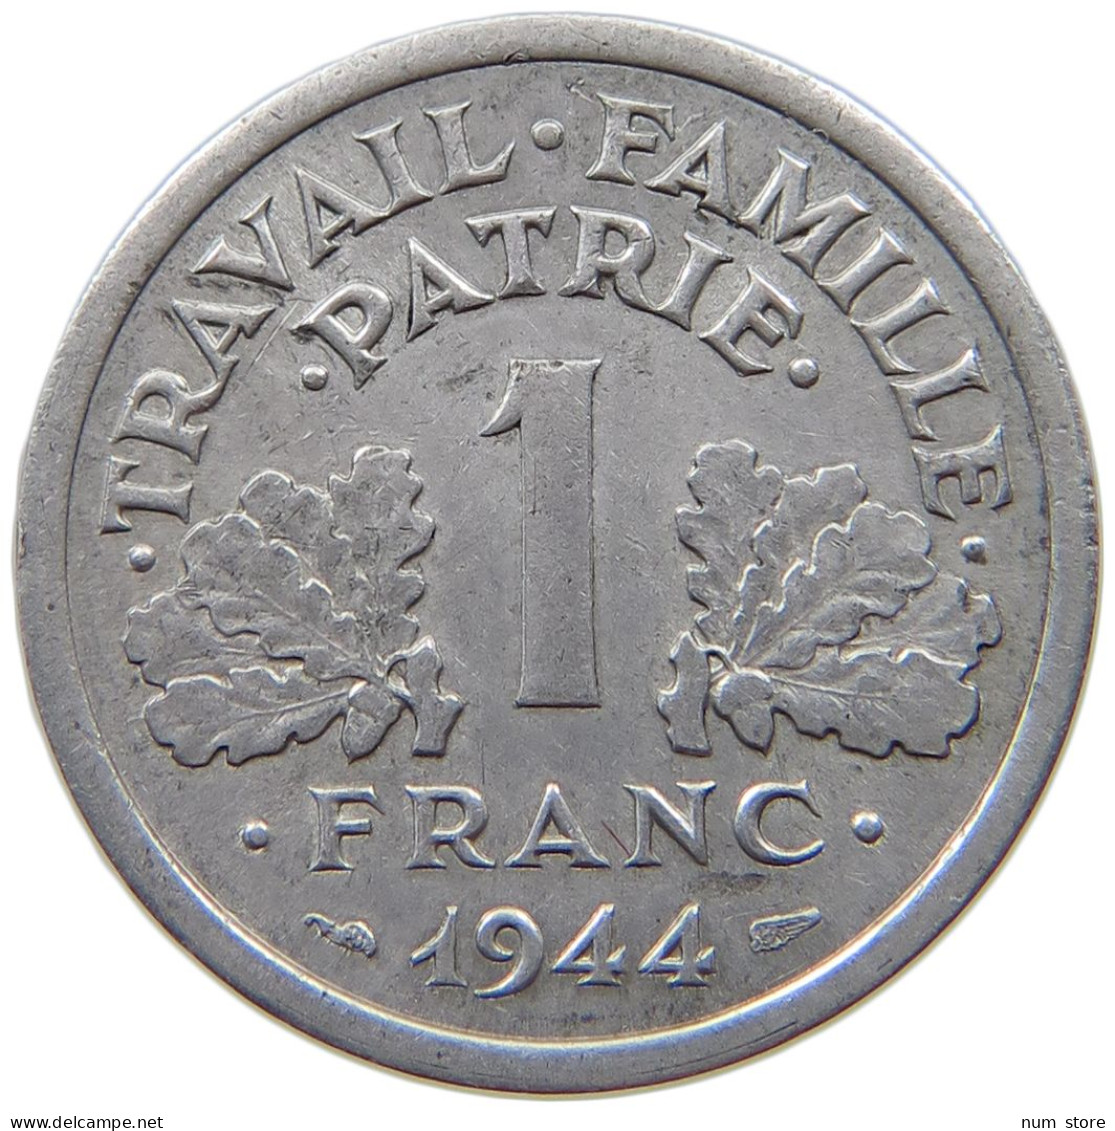 FRANCE 1 FRANC 1944 C #a021 0981 - 1 Franc